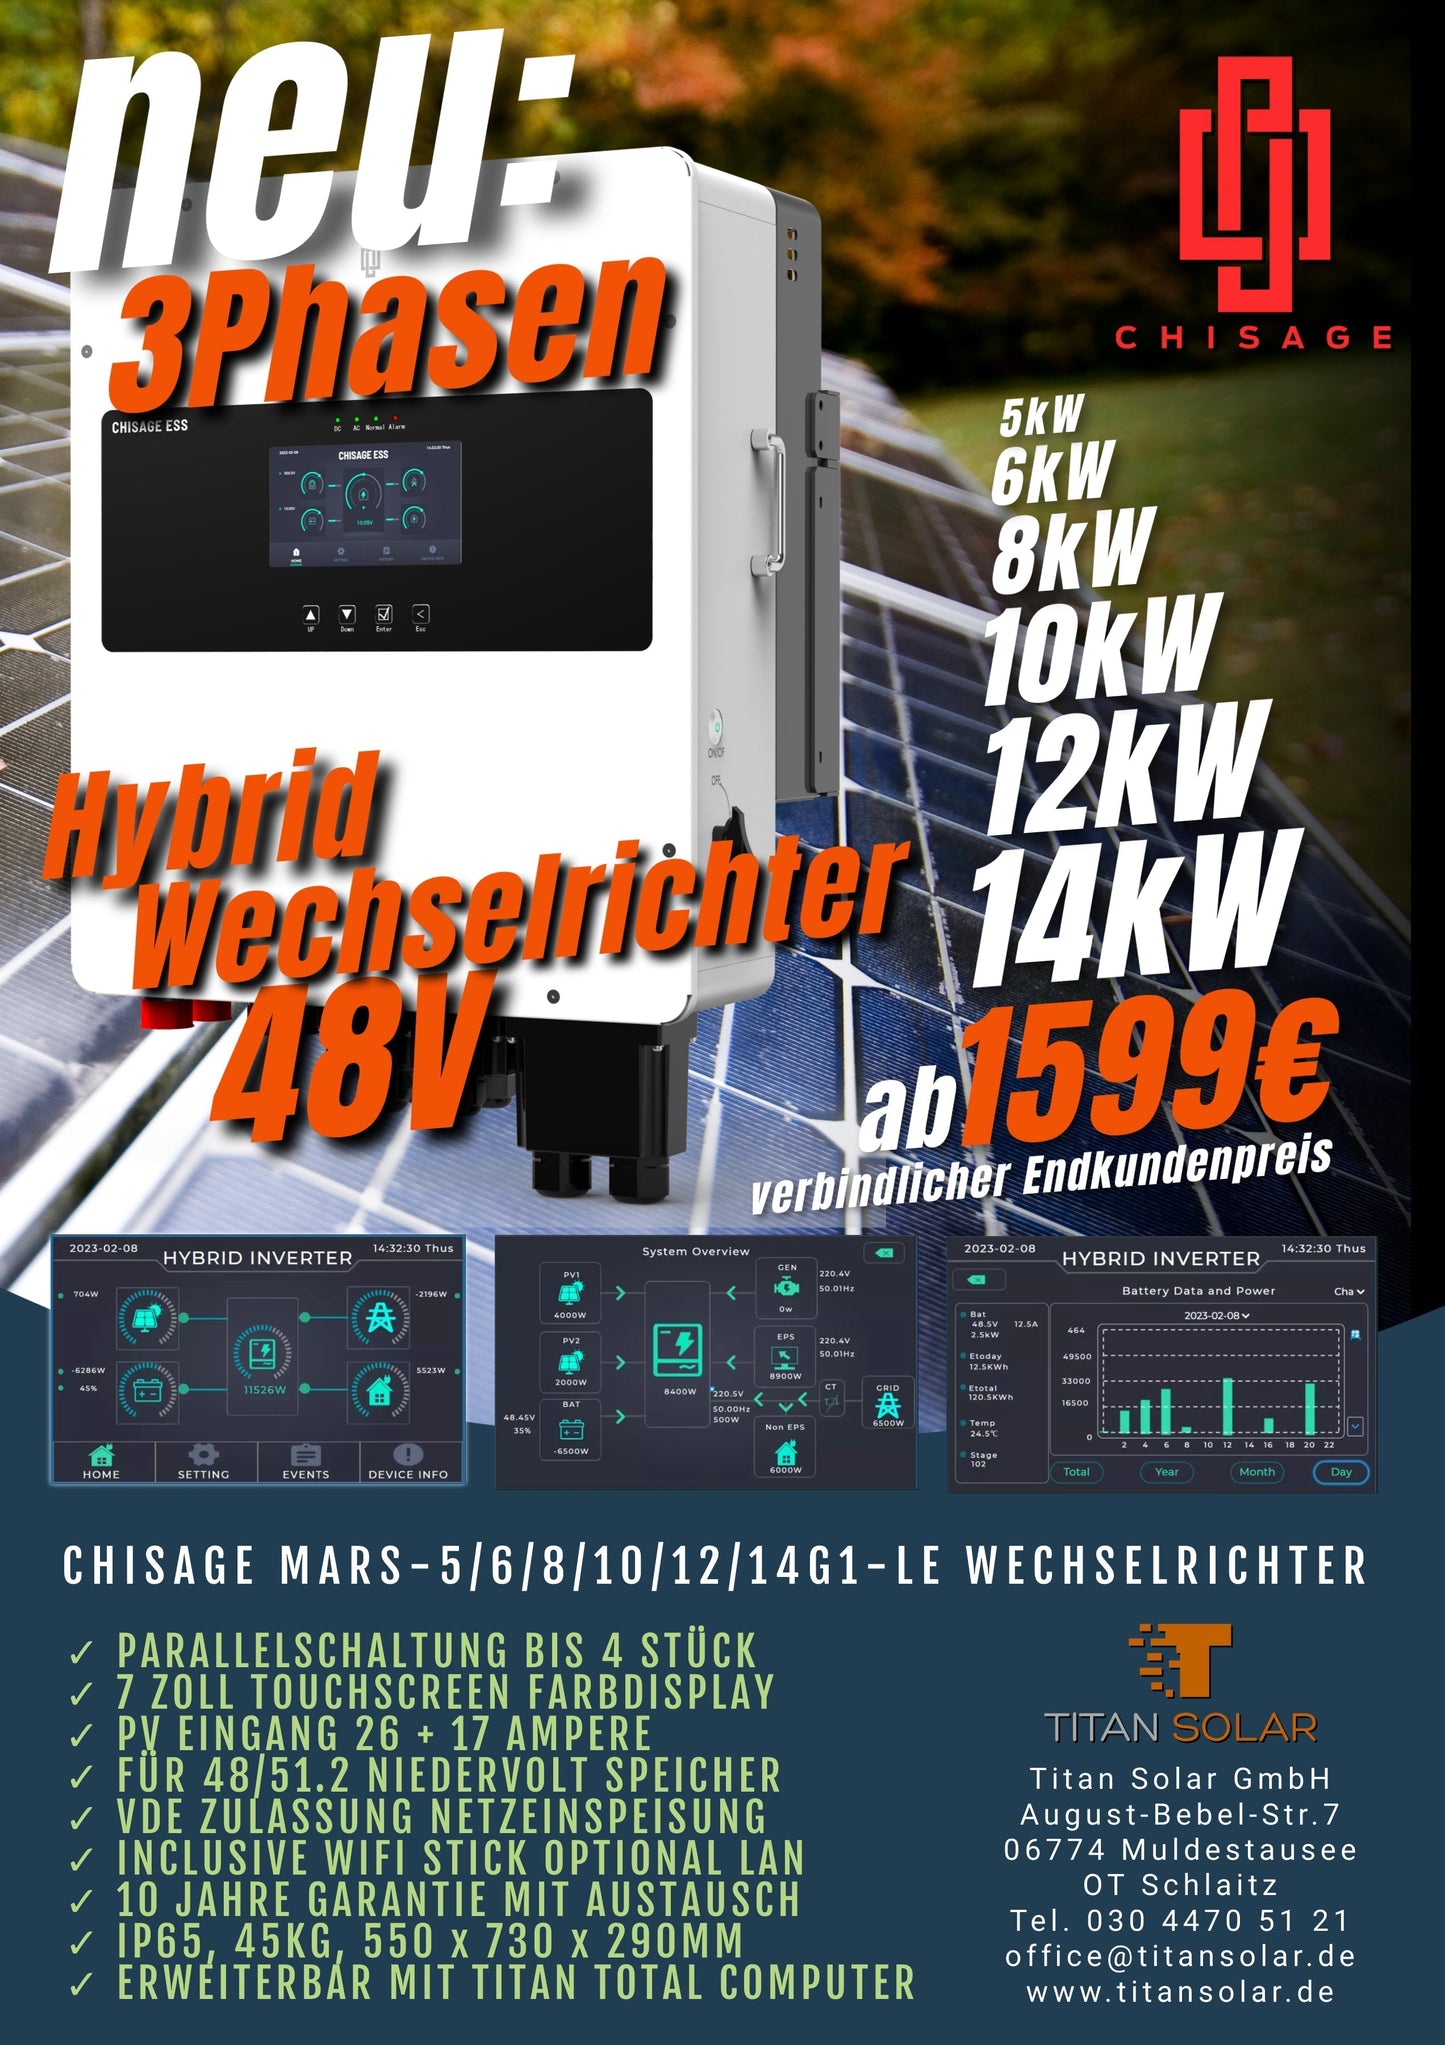 Art. 1508 - 8Kw Titan Solar Chisage Mars-8G2-LE 3 Phasen Hybrid Inverter mit WiFi VDE